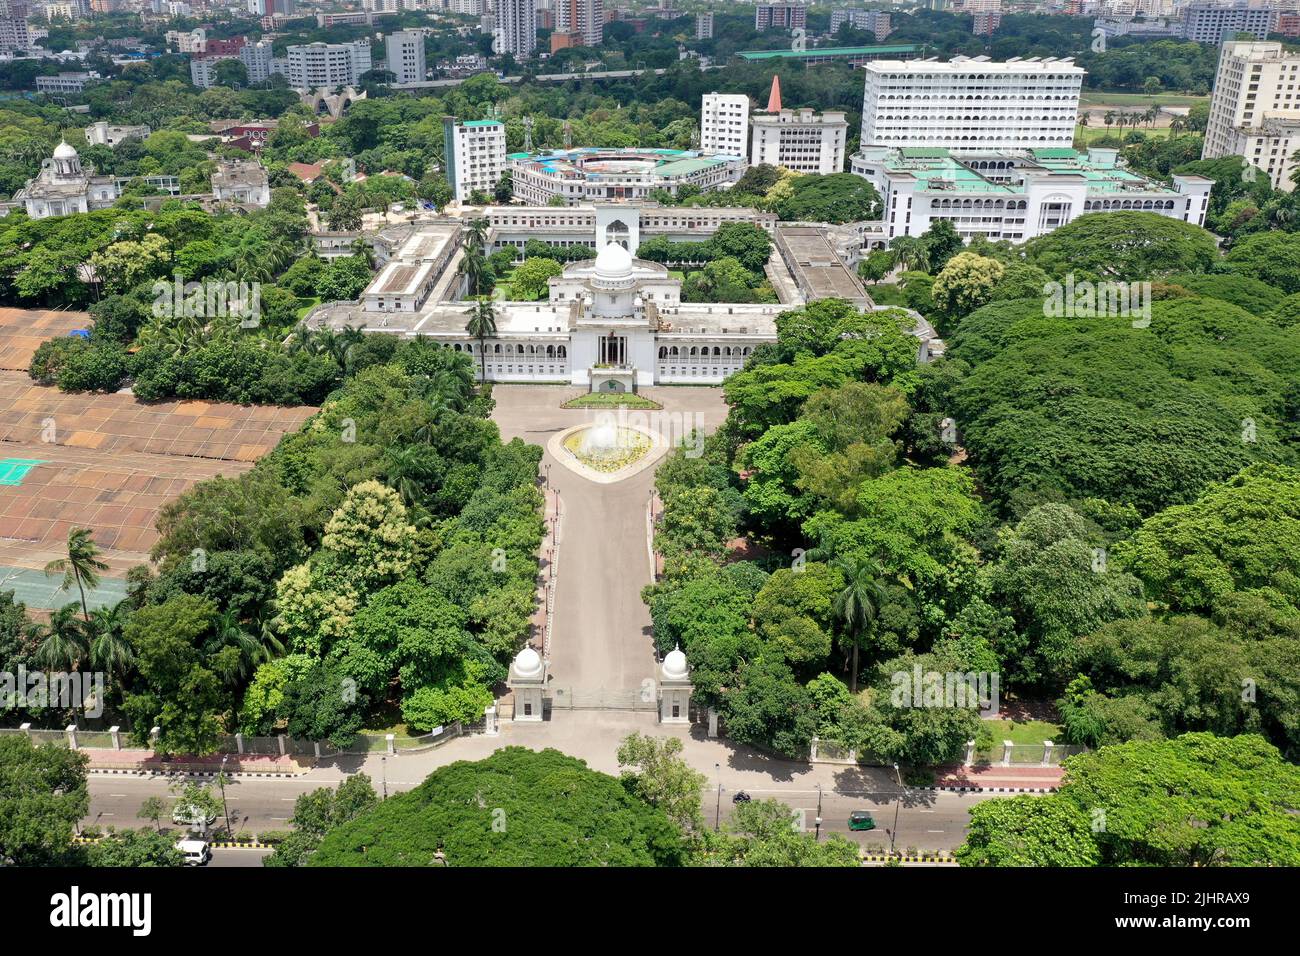 Dhaka, Bangladesh - July 12, 2022: The bird's-eye view of the Supreme Court building of Bangladesh. The High Court Division of the Supreme Court of Ba Stock Photo